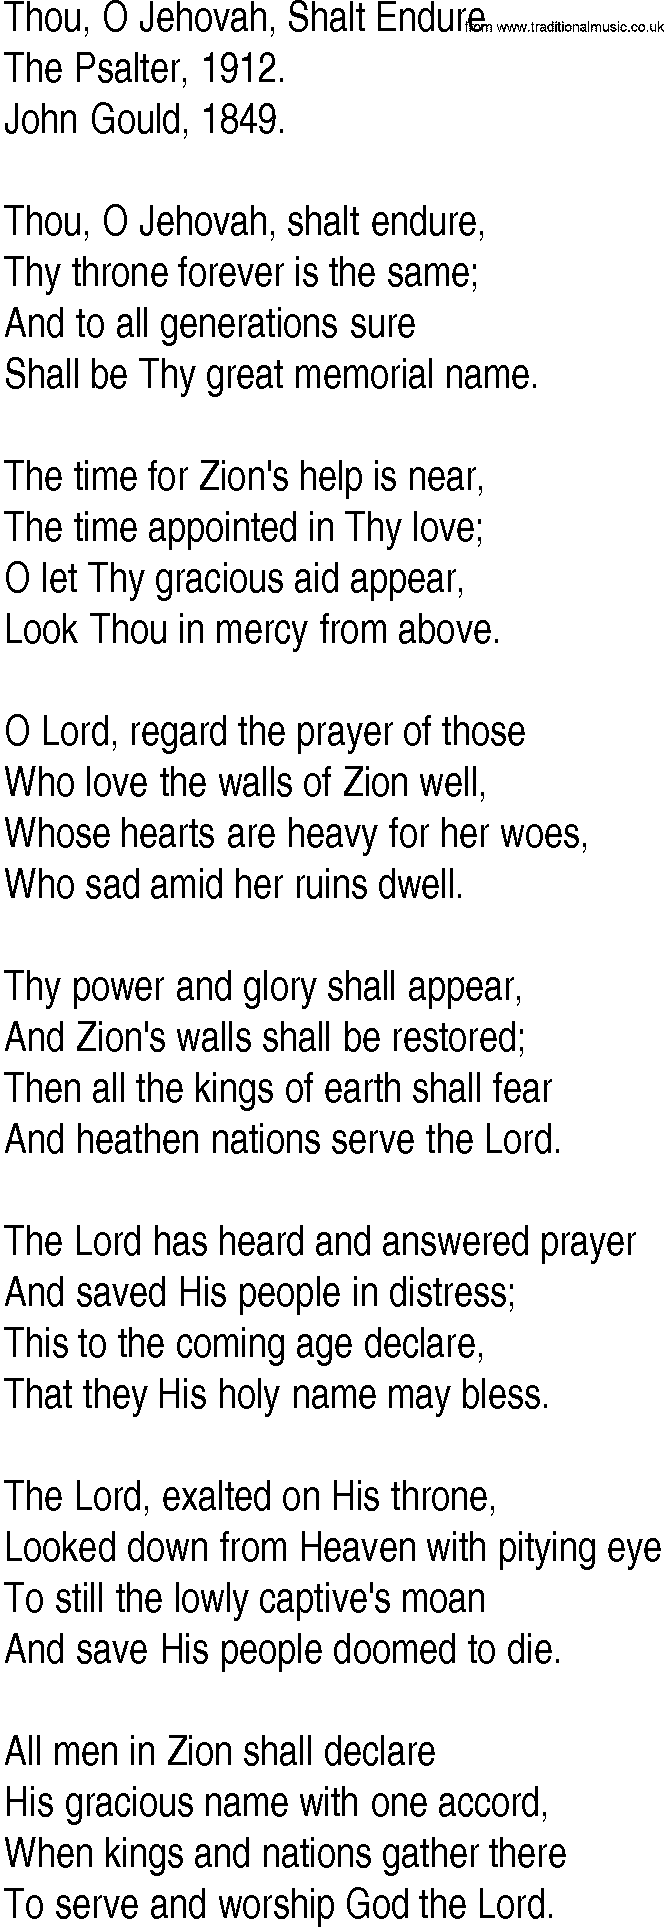 Hymn and Gospel Song: Thou, O Jehovah, Shalt Endure by The Psalter lyrics